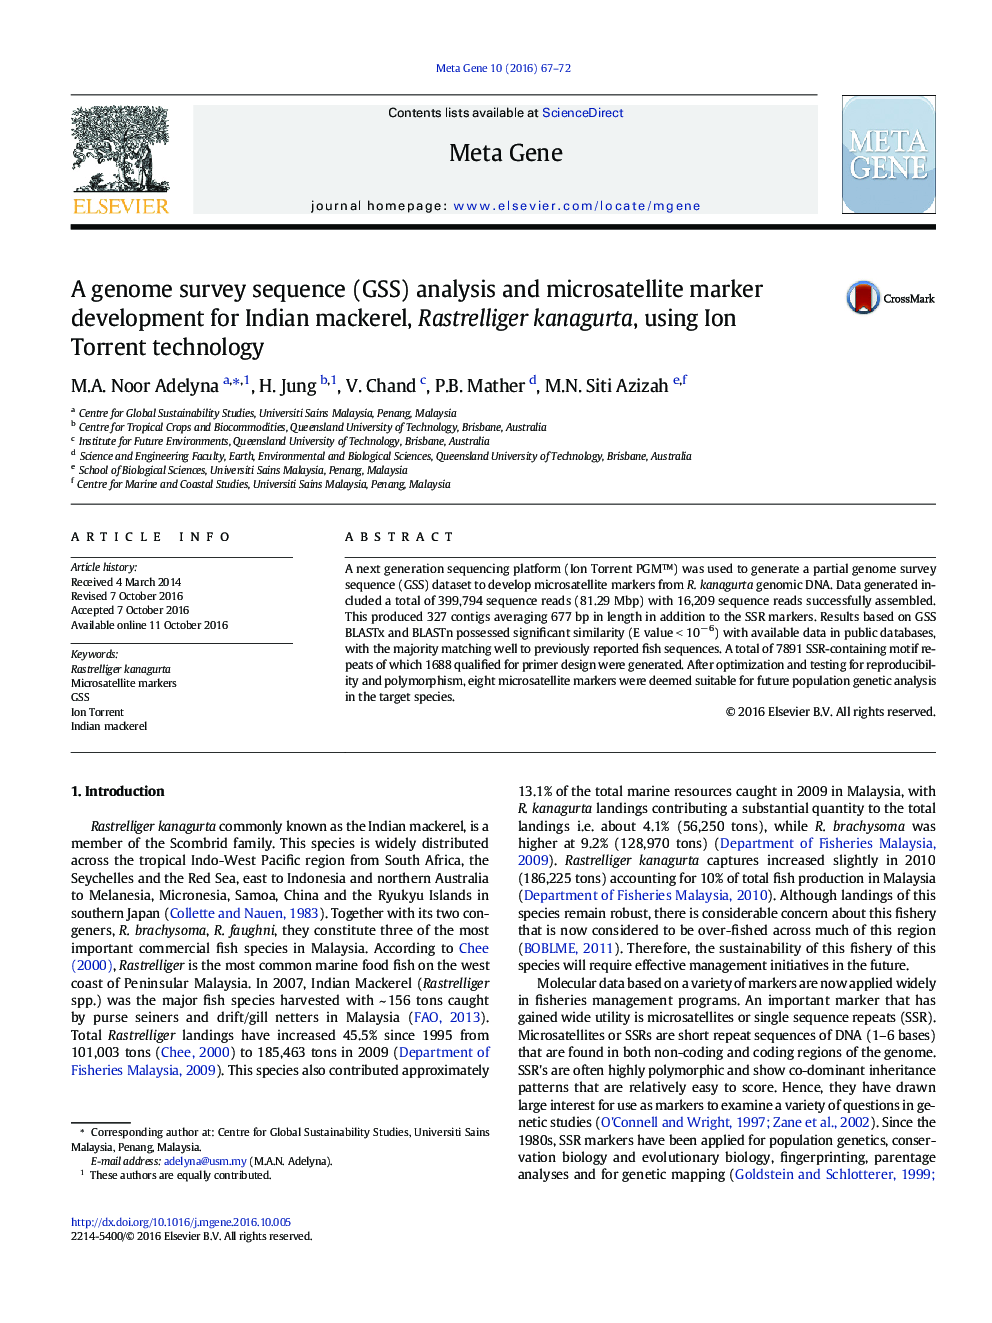 A genome survey sequence (GSS) analysis and microsatellite marker development for Indian mackerel, Rastrelliger kanagurta, using Ion Torrent technology